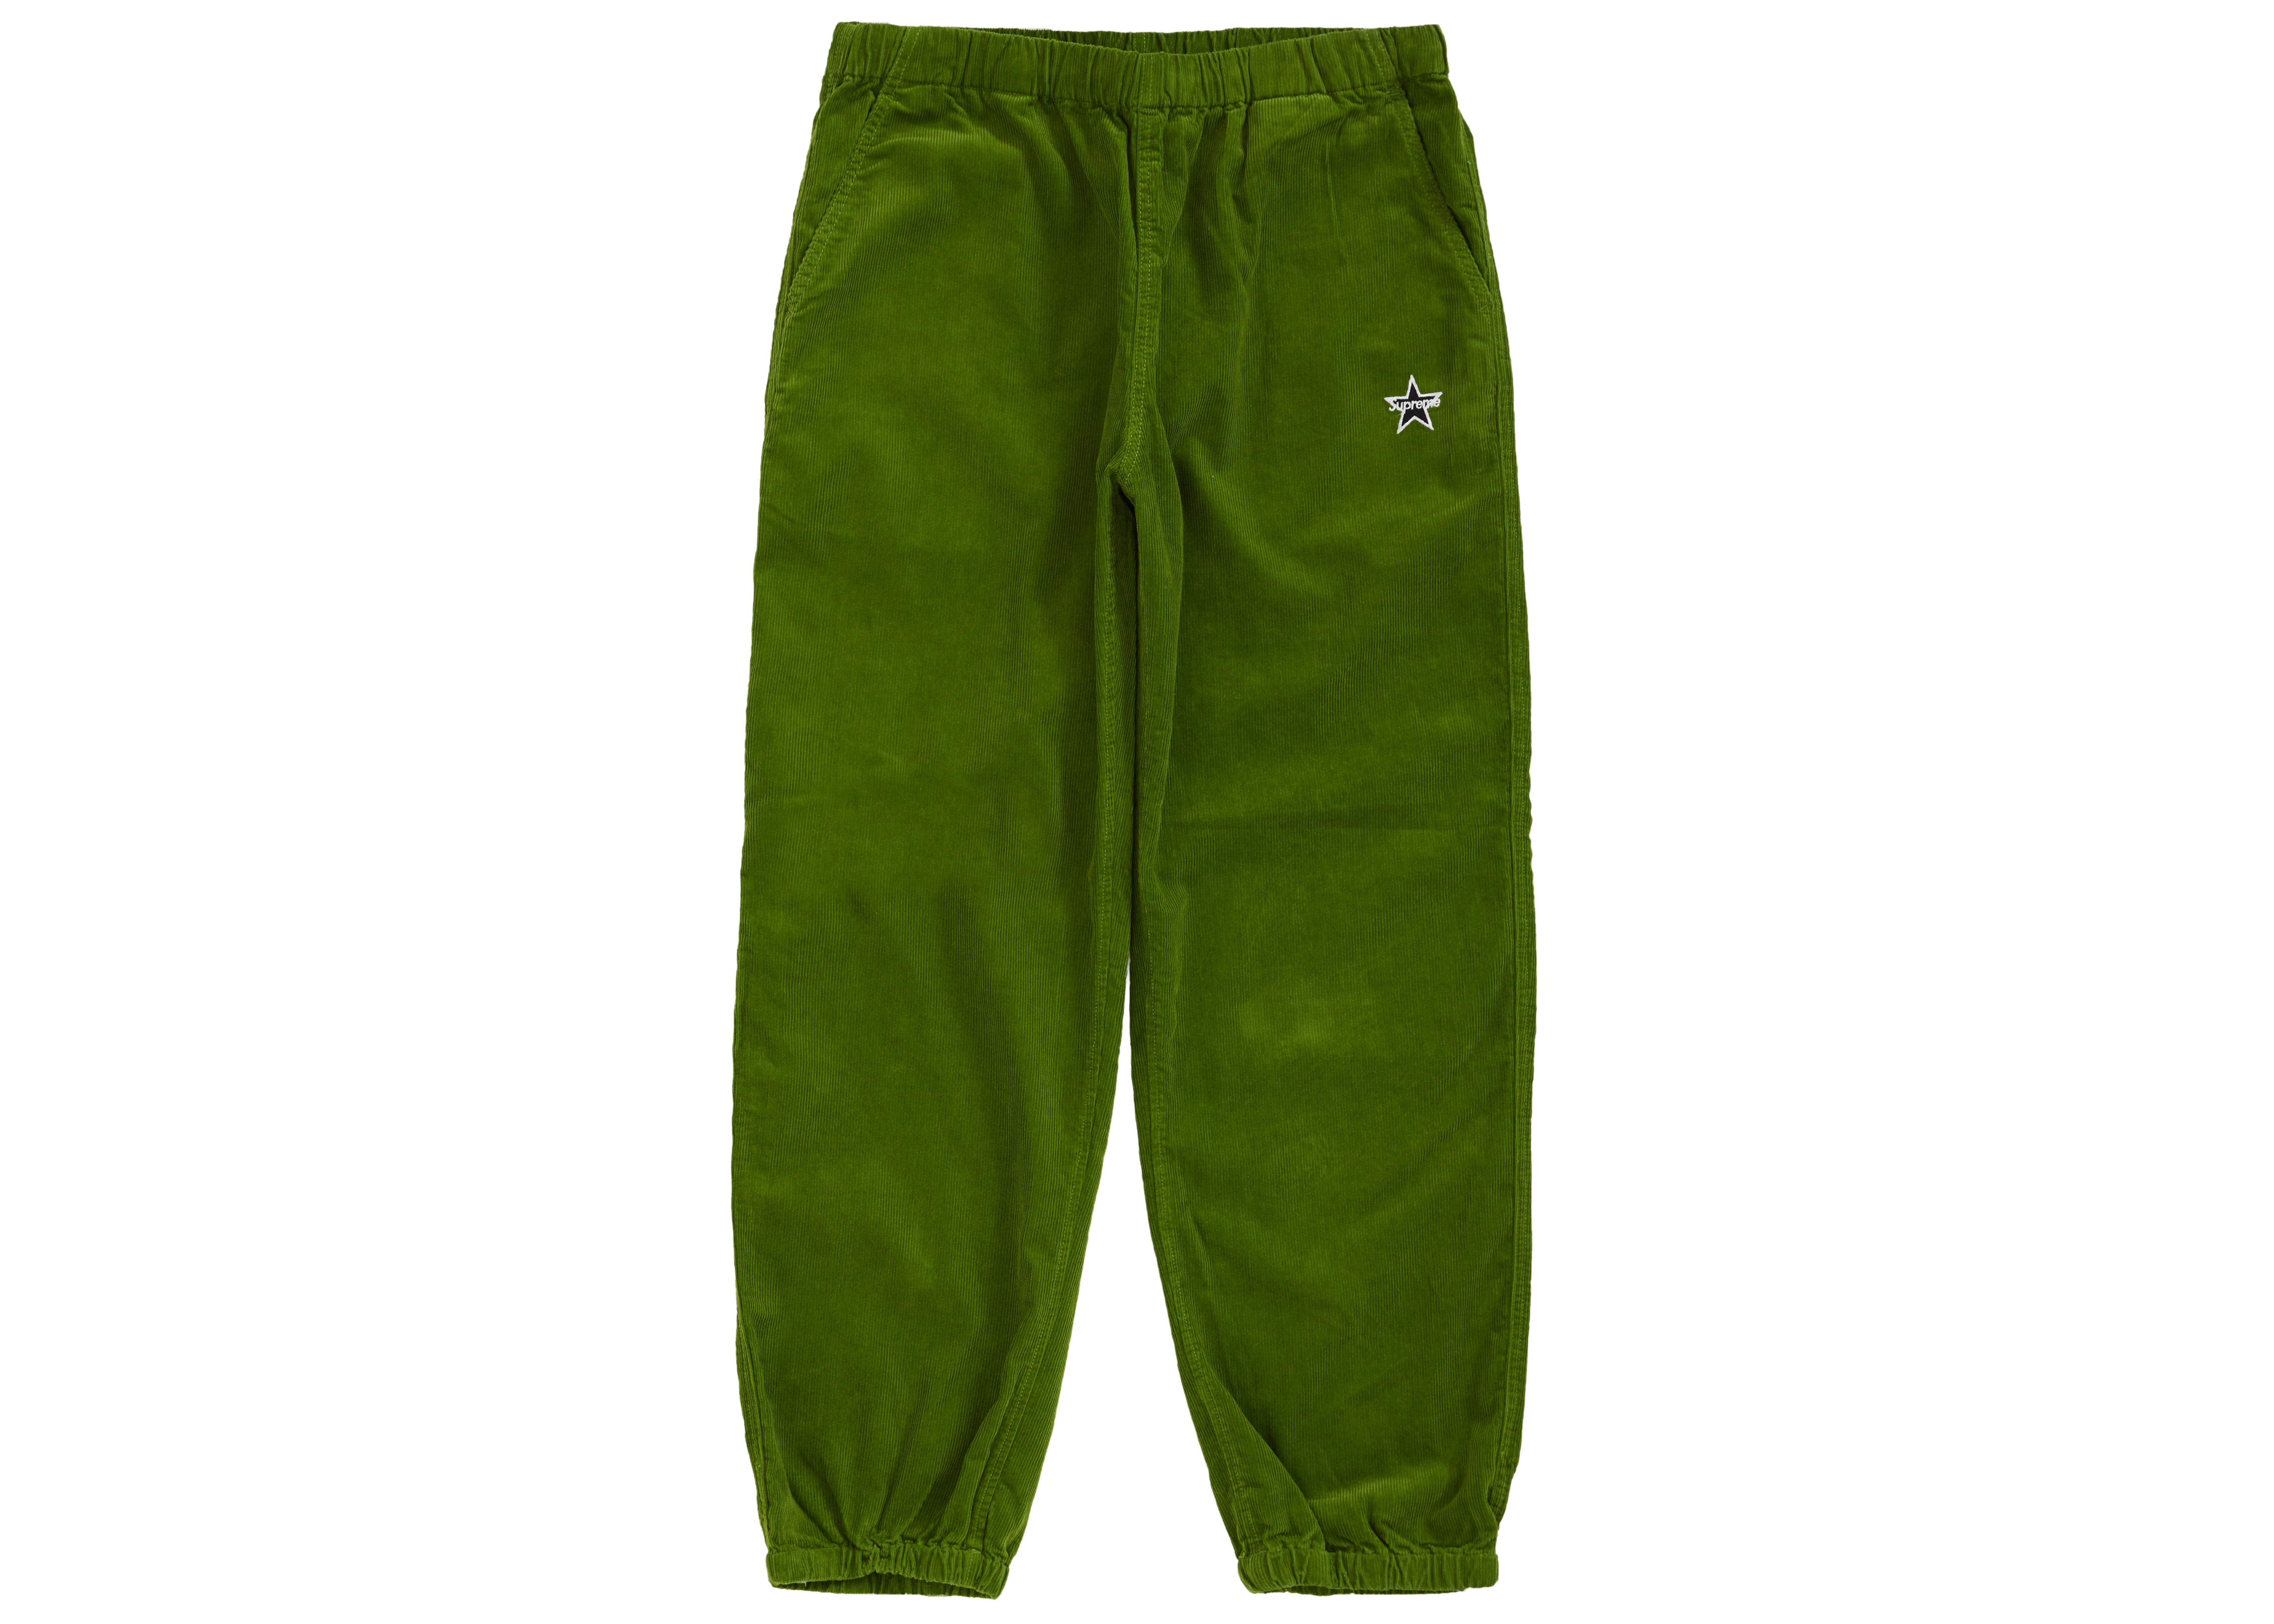 Supreme Corduroy Skate Pant Green - FW19 Men's - US